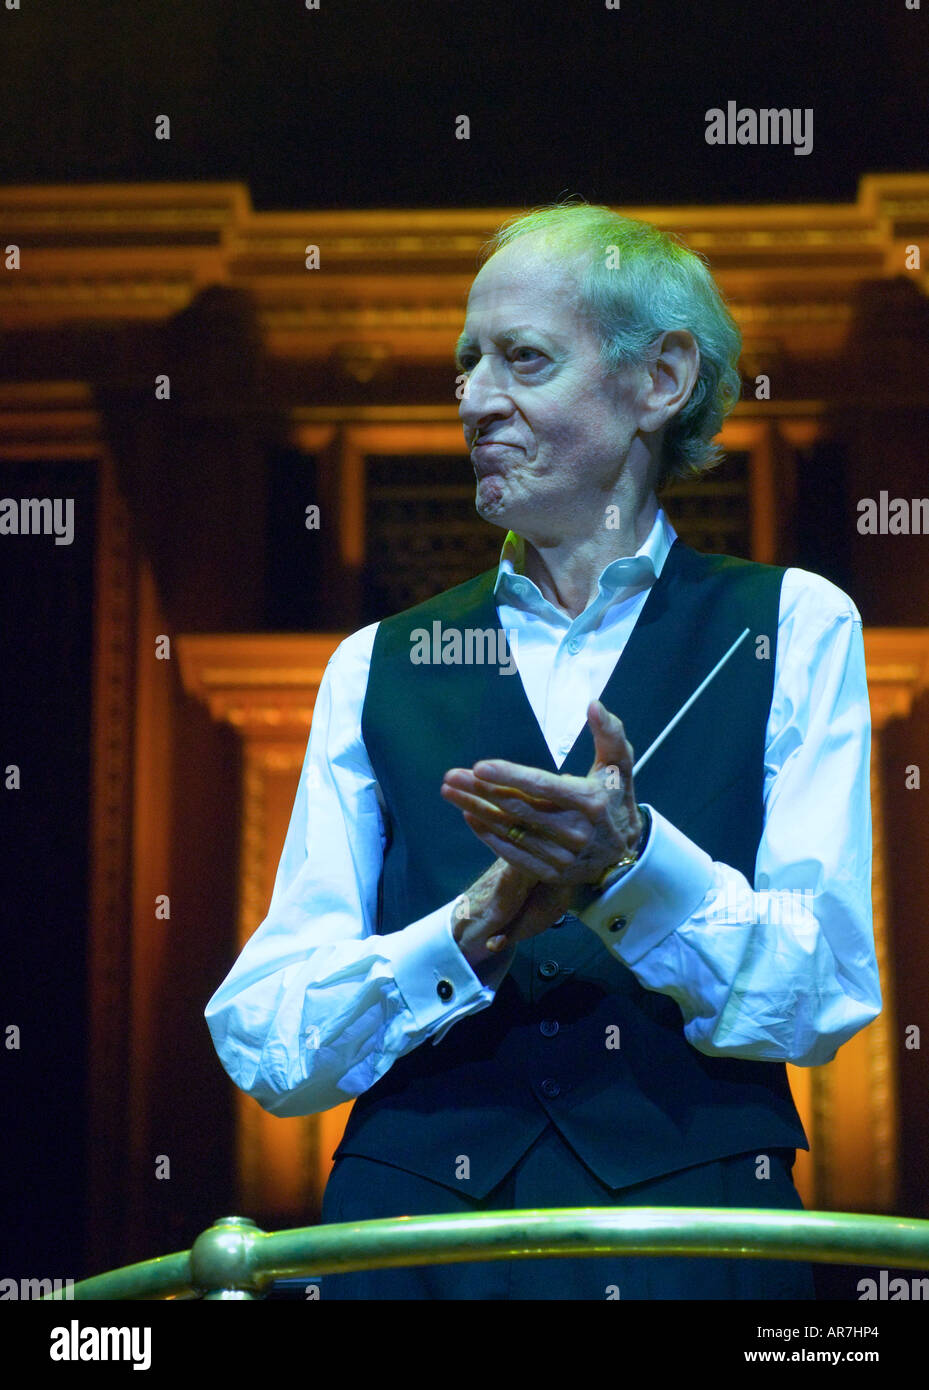 Oscar winning British film composer John Barry (1933-2011) in concert at Royal Albert Hall, London, UK. 28th September 2006. Stock Photo